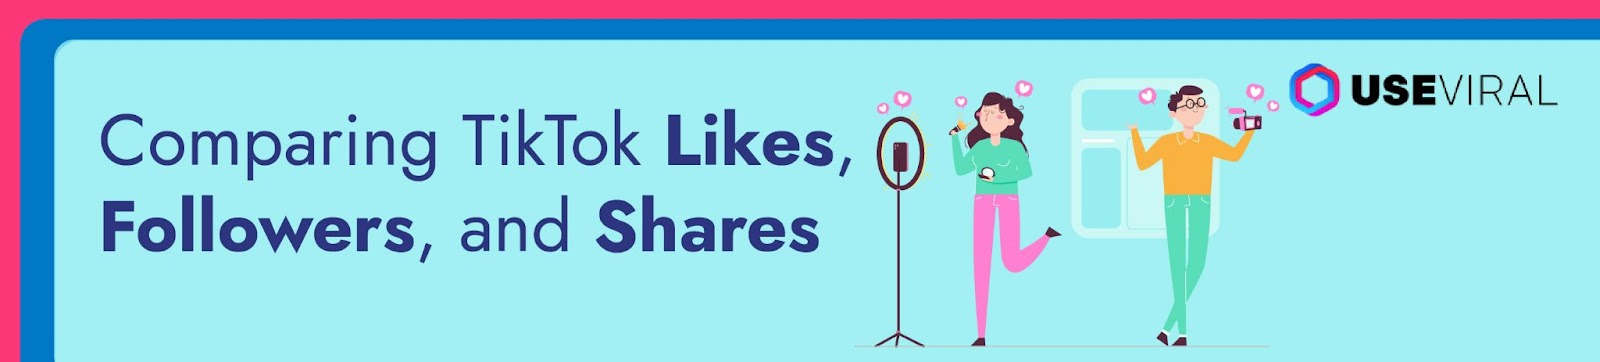 Comparing TikTok Likes, Followers, and Shares